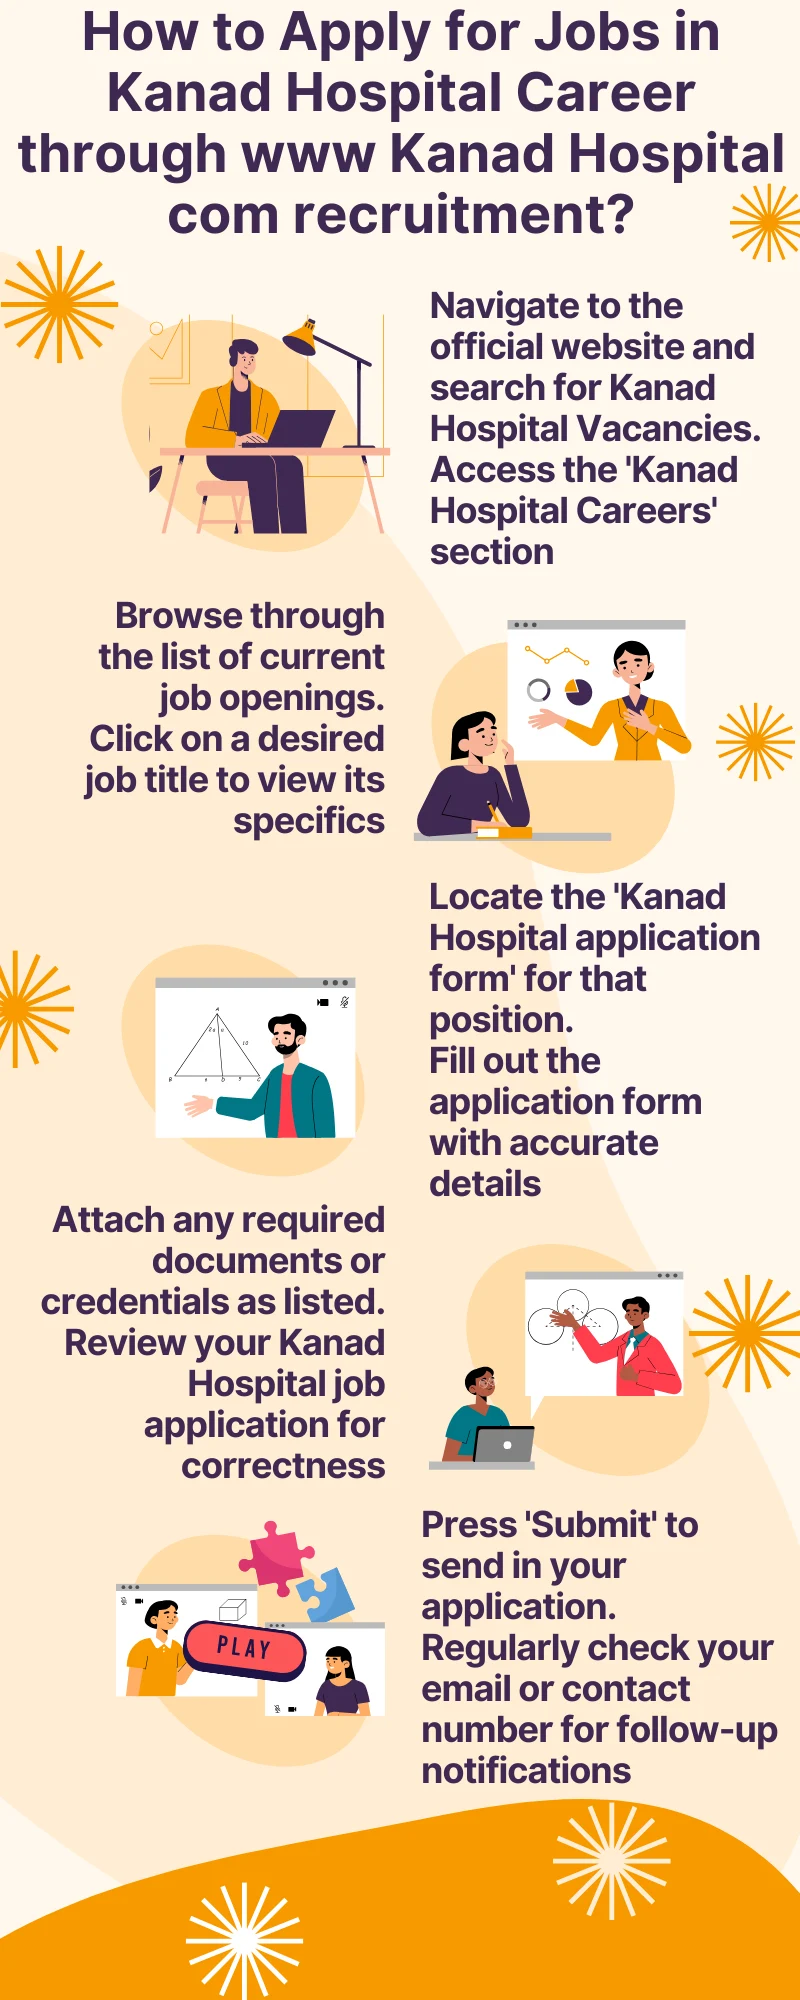 How to Apply for Jobs in Kanad Hospital Career through www Kanad Hospital com recruitment?